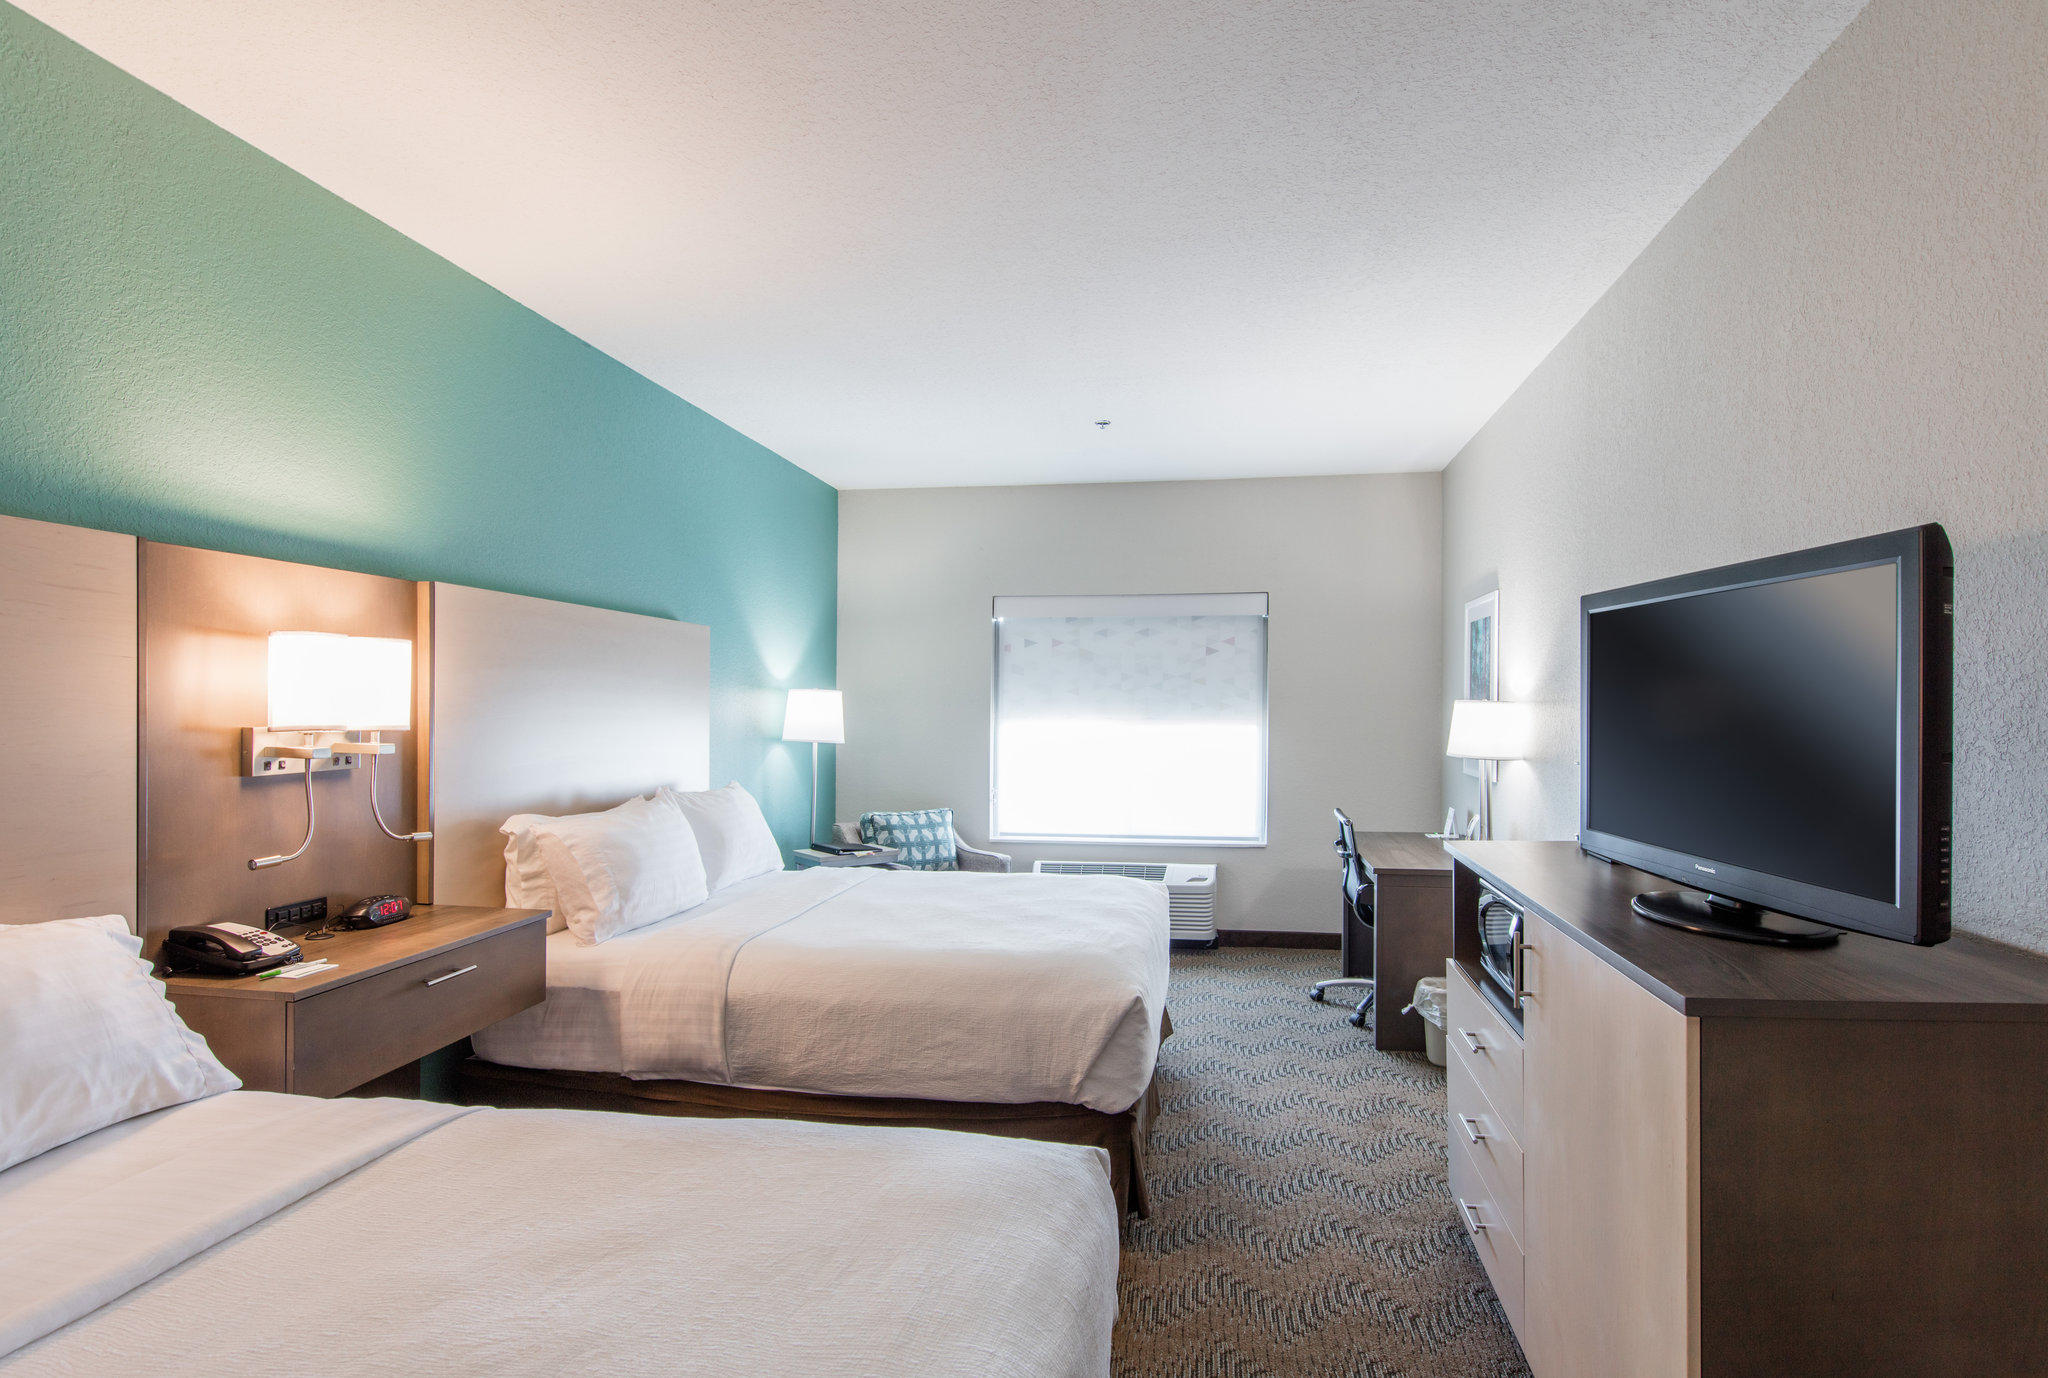 Holiday Inn & Suites Lake City Photo